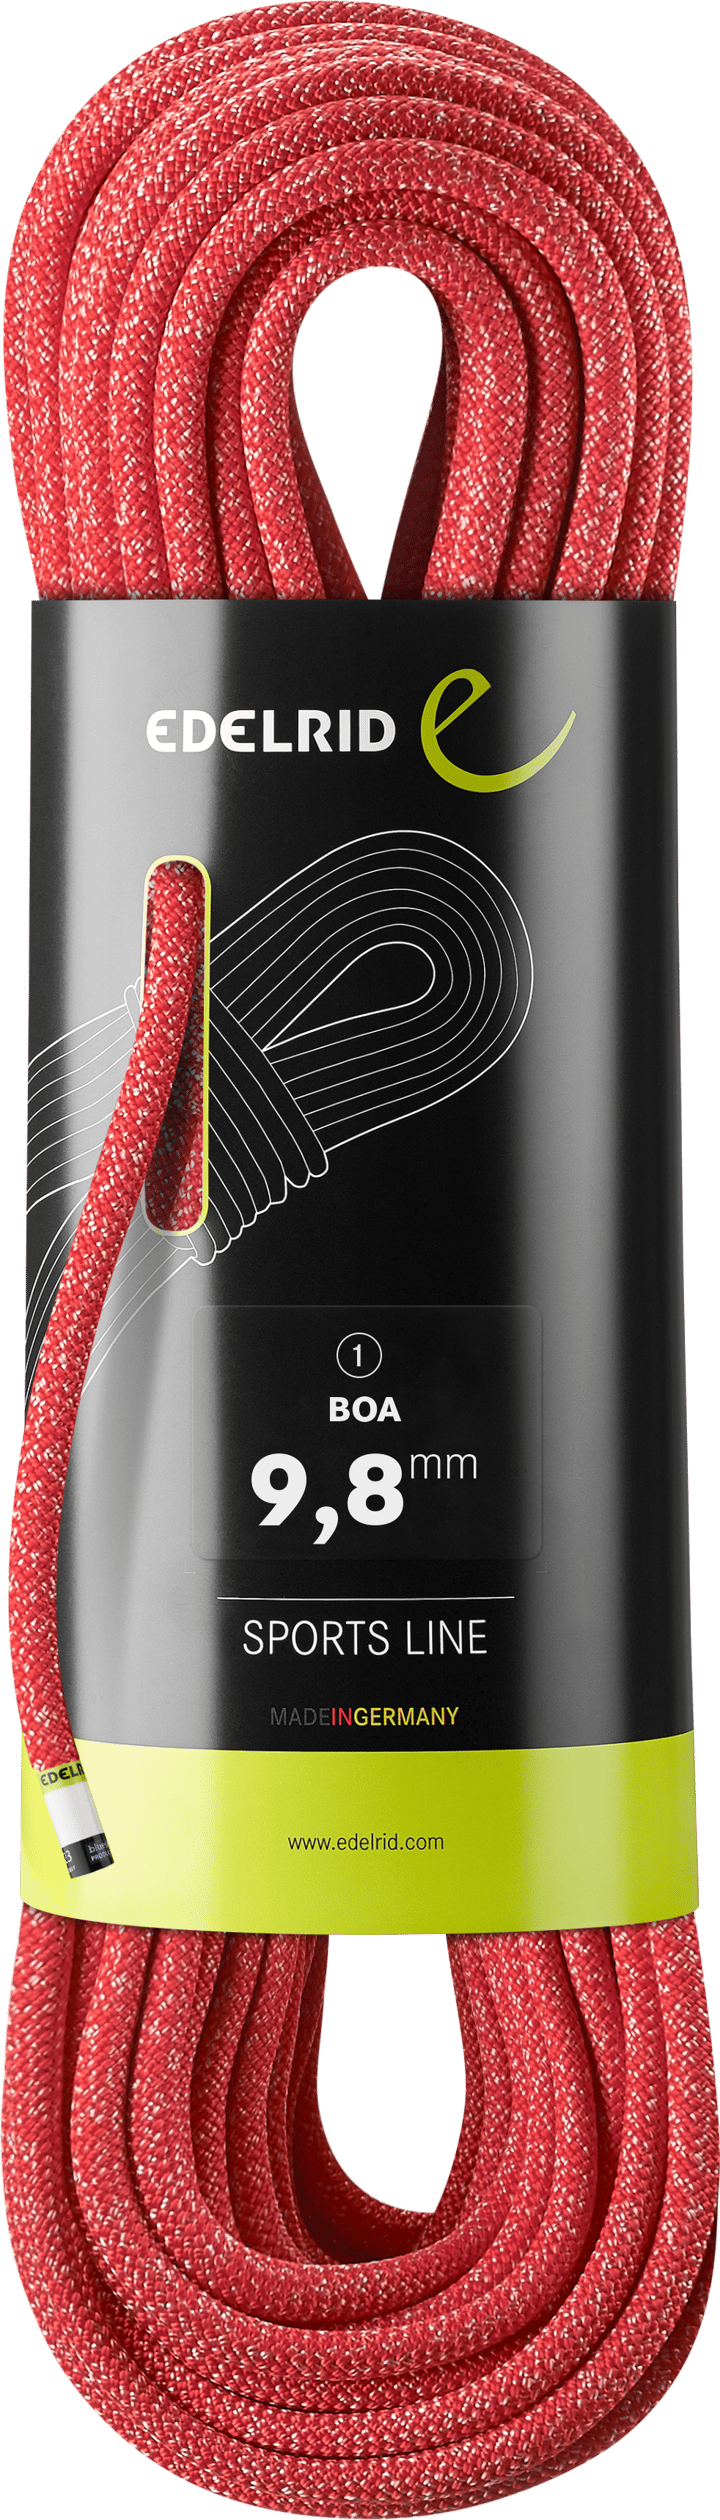 Edelrid Boa 9,8mm 70m Climbing Rope - Single Rope - Climbing Ropes